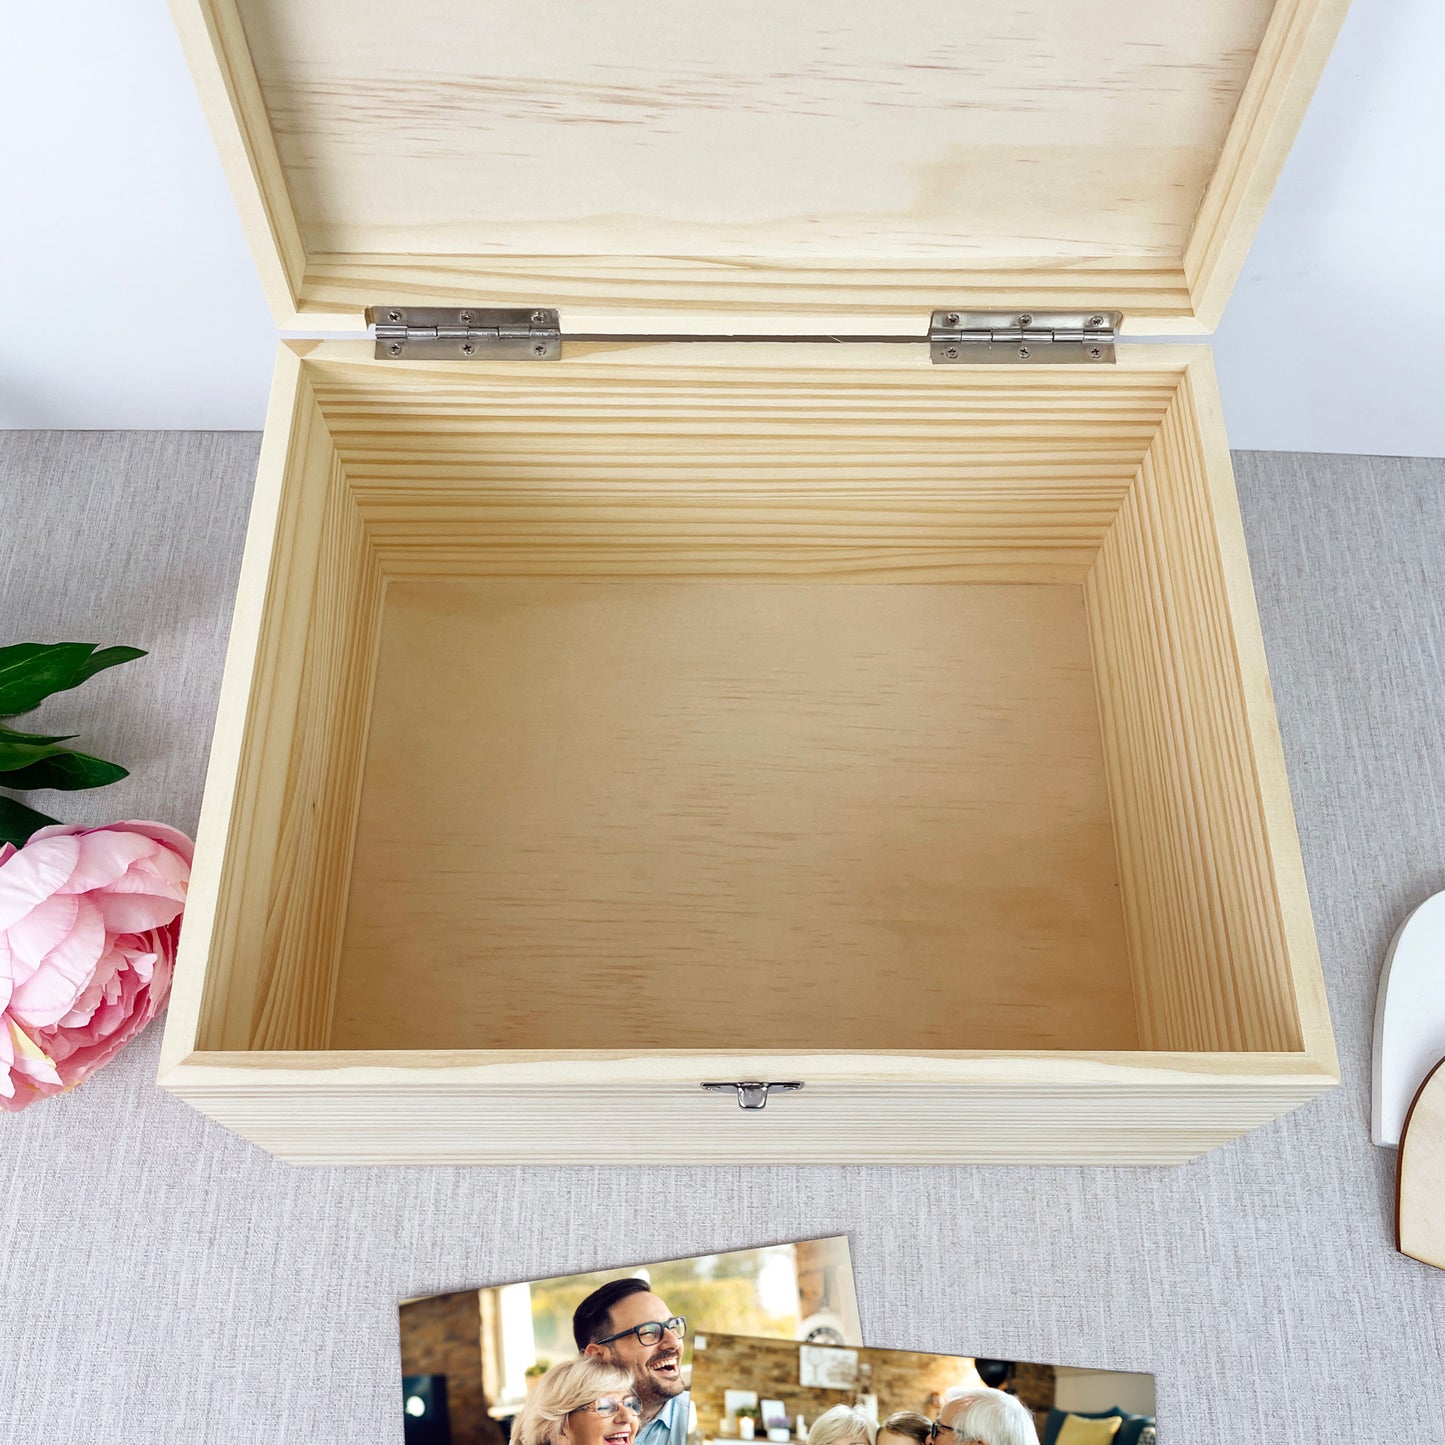 Personalised Pine Lily Photo Memory Box - 4 Sizes (20cm | 26cm | 30cm | 36cm)